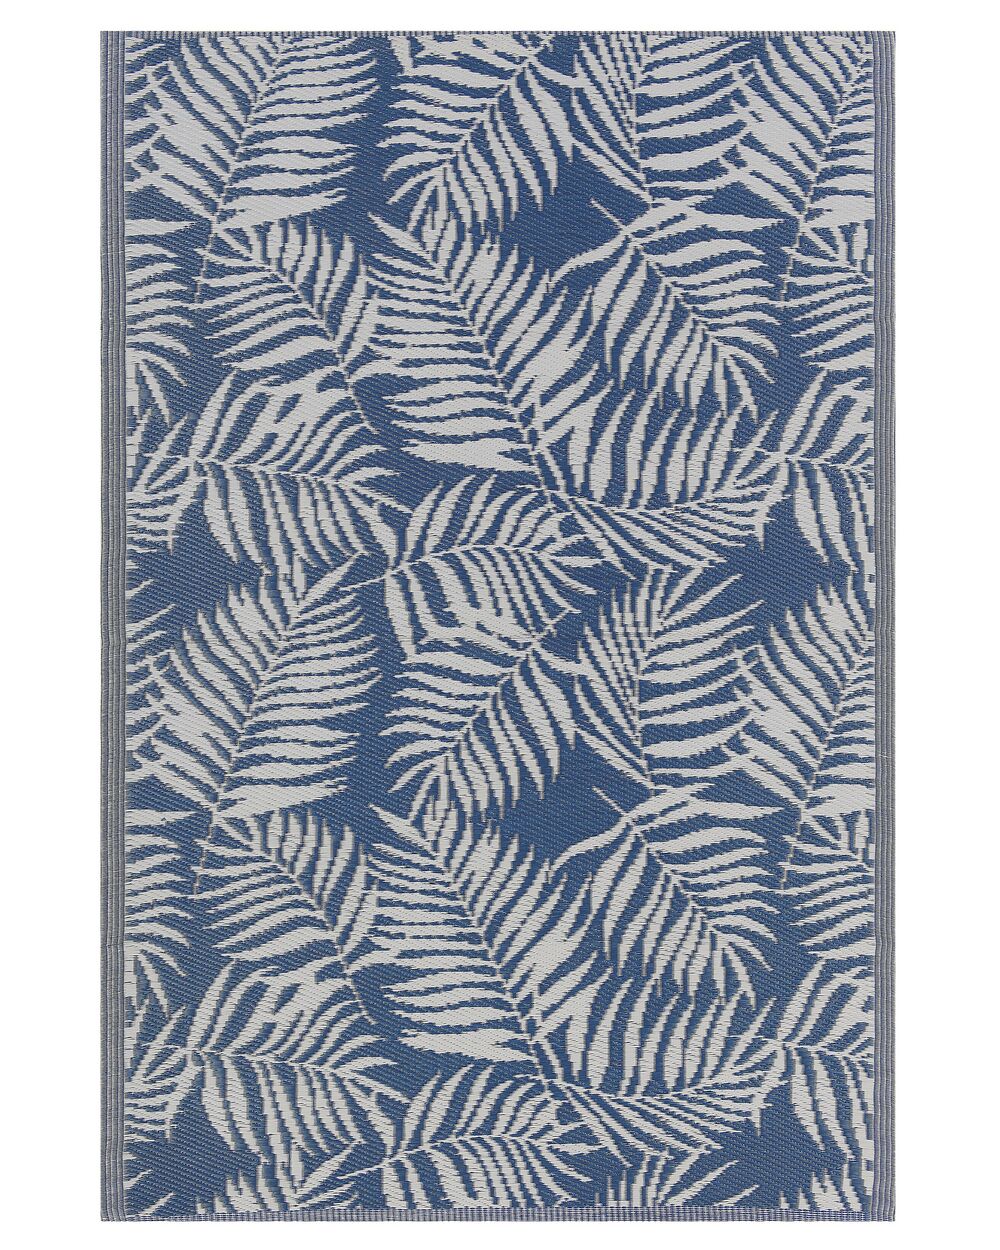 Outdoor Teppich blau 120 x 180 cm Palmenmuster Kurzflor KOTA 